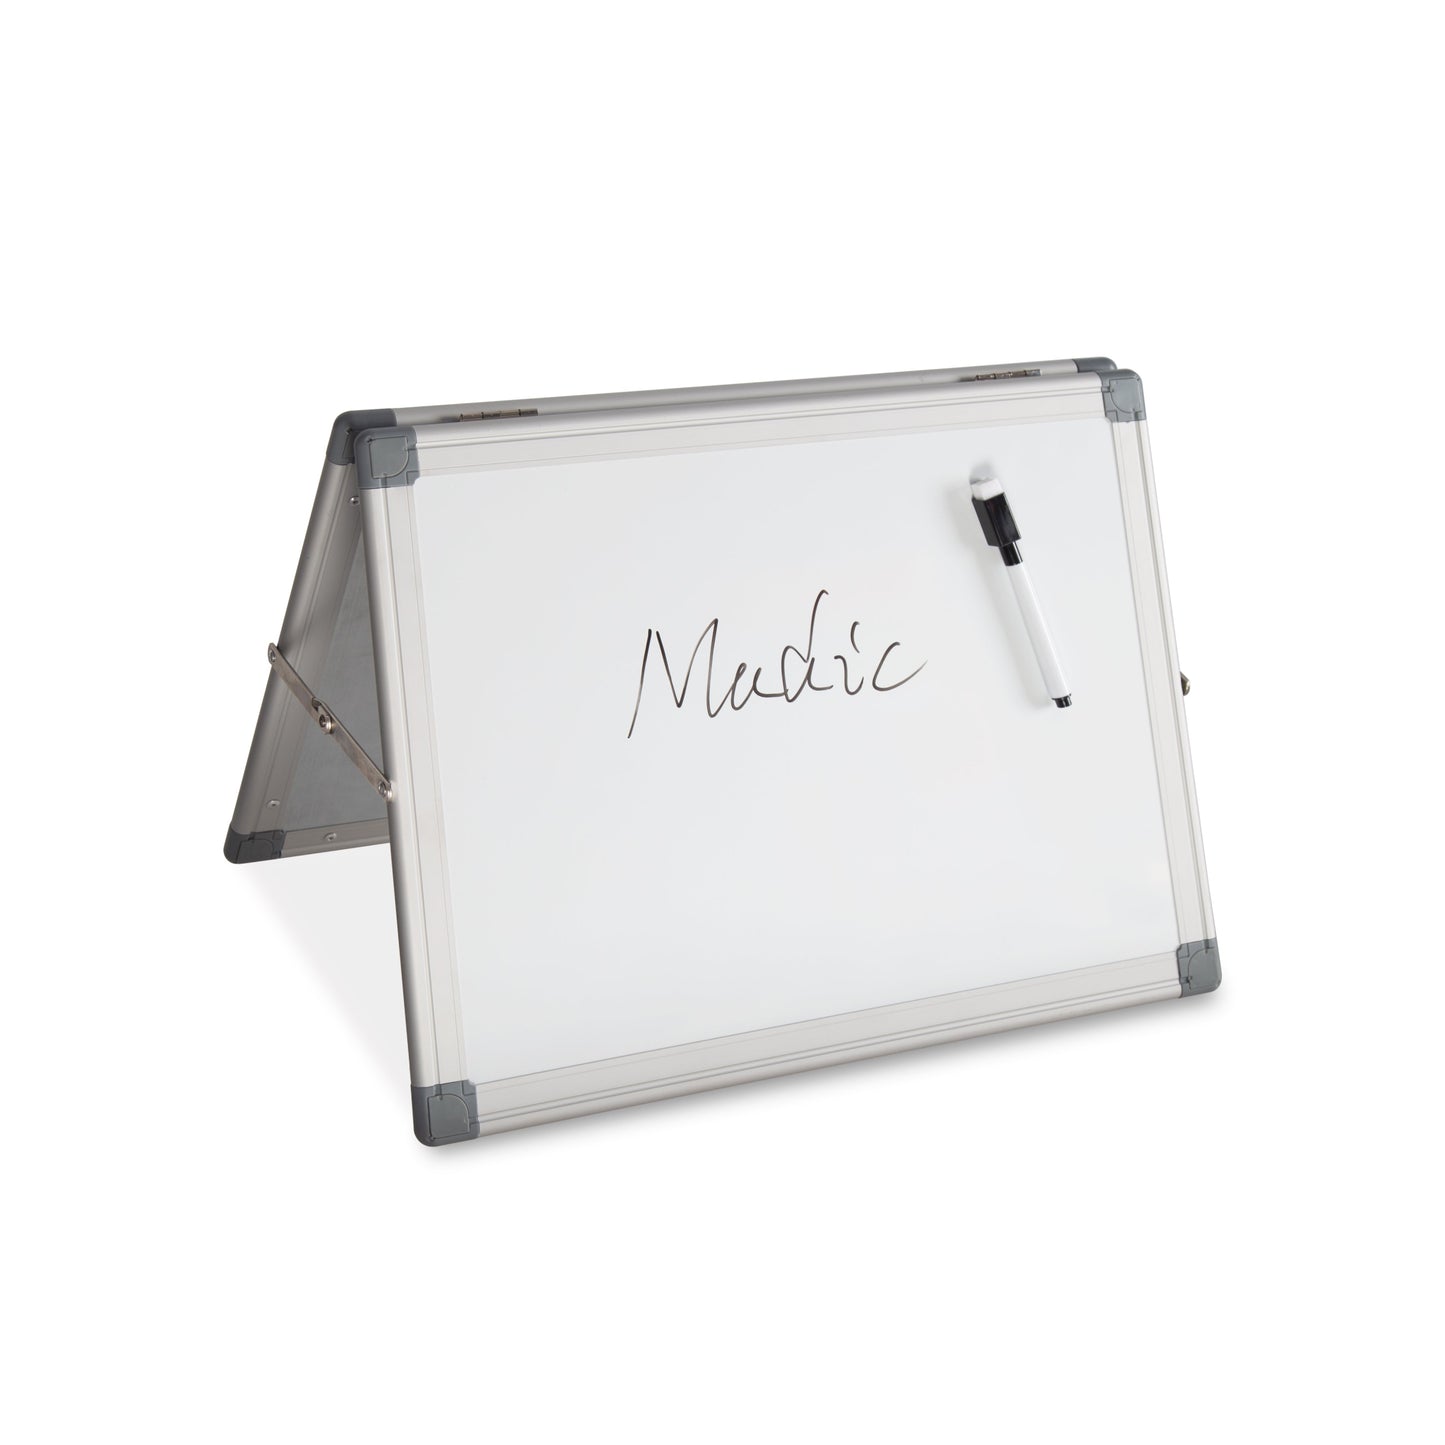 M28 foldable aluminum frame magnetic desktop whiteboard, tabletop writing board - Premium magnetic whiteboard from Madic Whiteboard - Madic Whiteboard